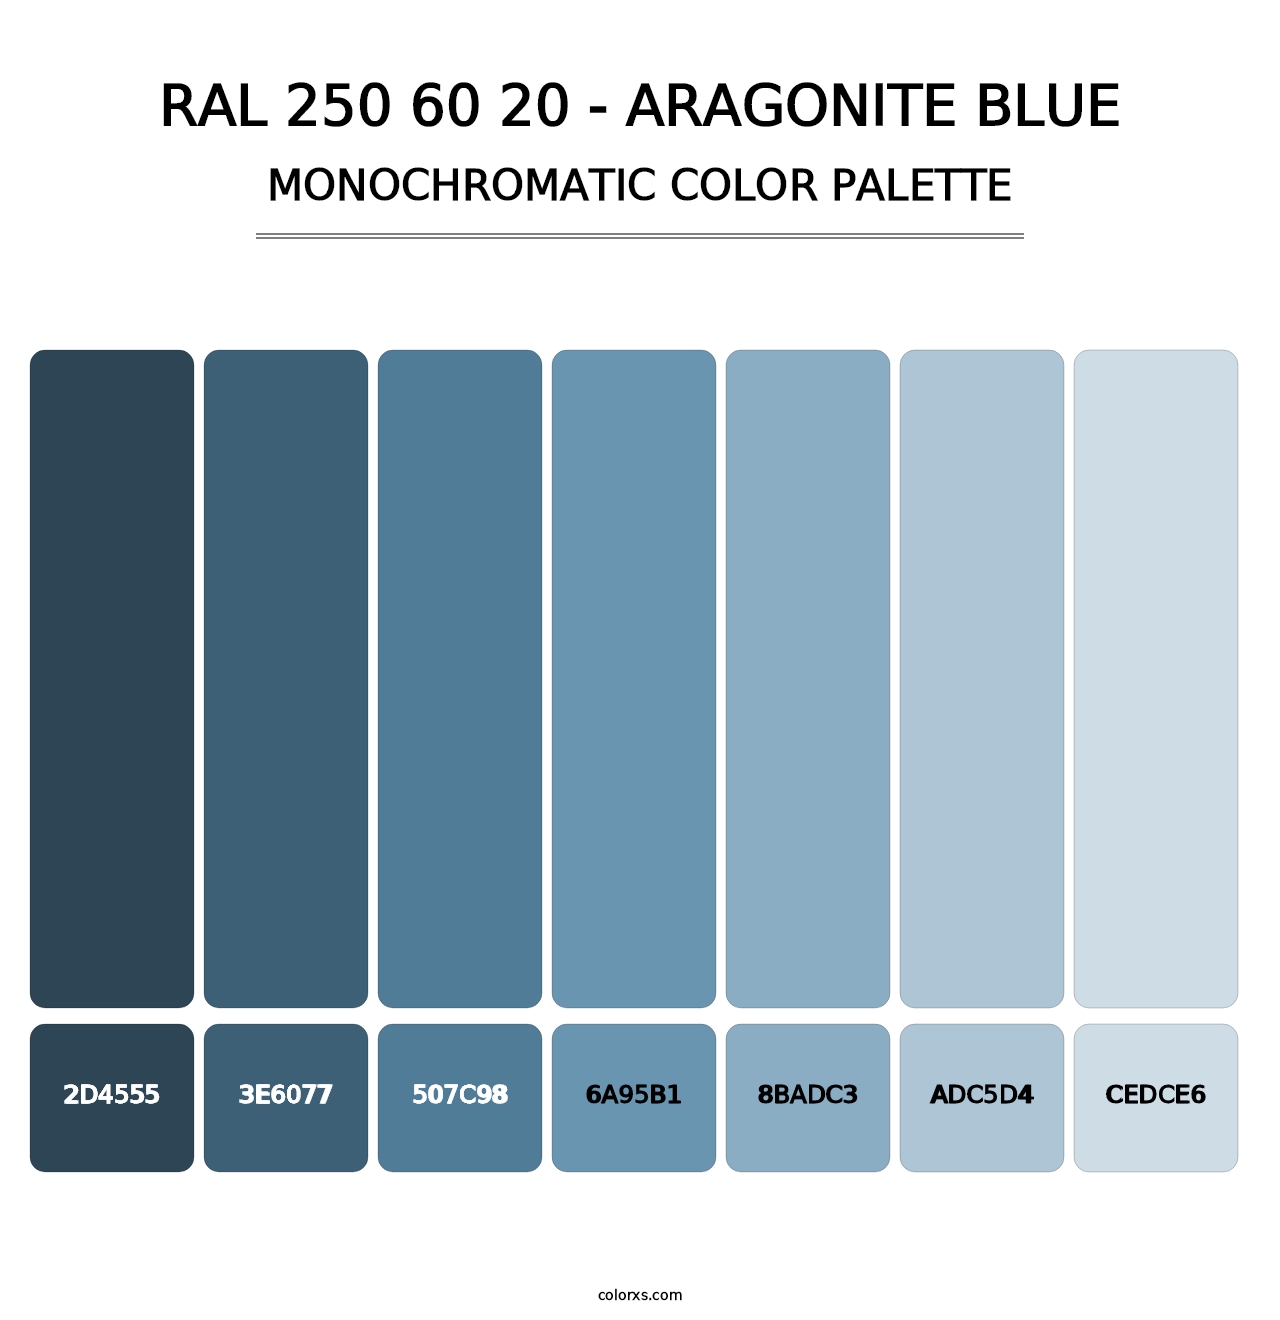 RAL 250 60 20 - Aragonite Blue - Monochromatic Color Palette